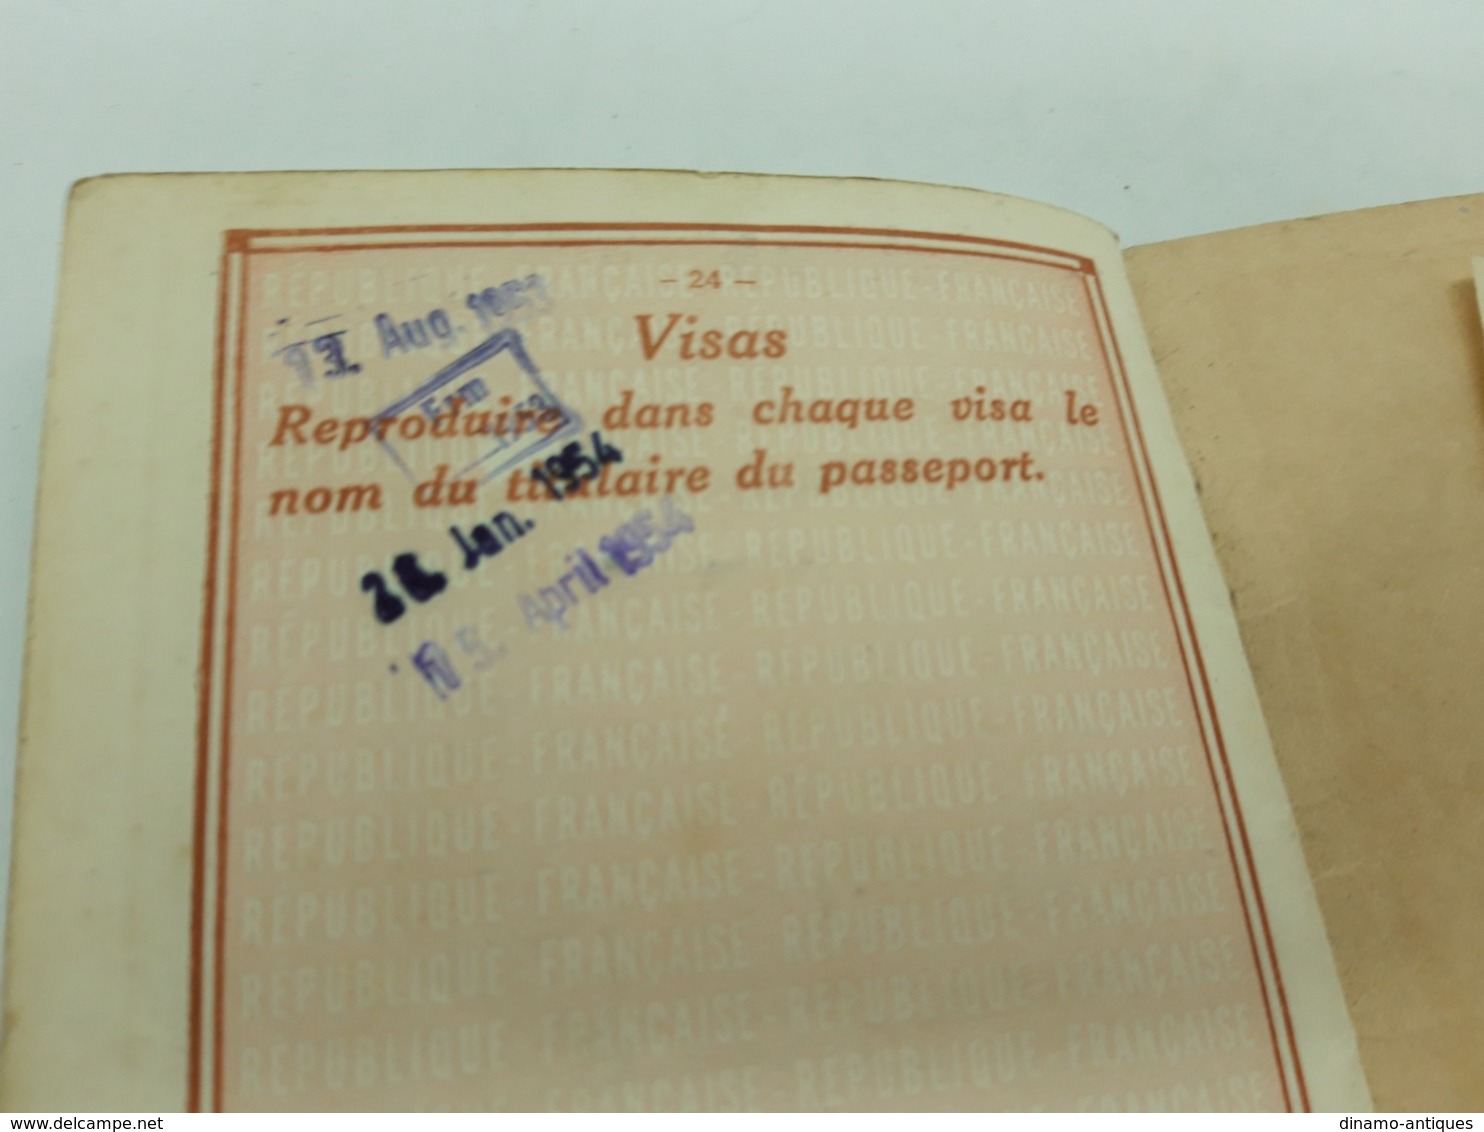 1948 Saar Sarrois passport passeport reisepass  issued in Sarrebruck - full of visas - AMG revenues fiscal timbres